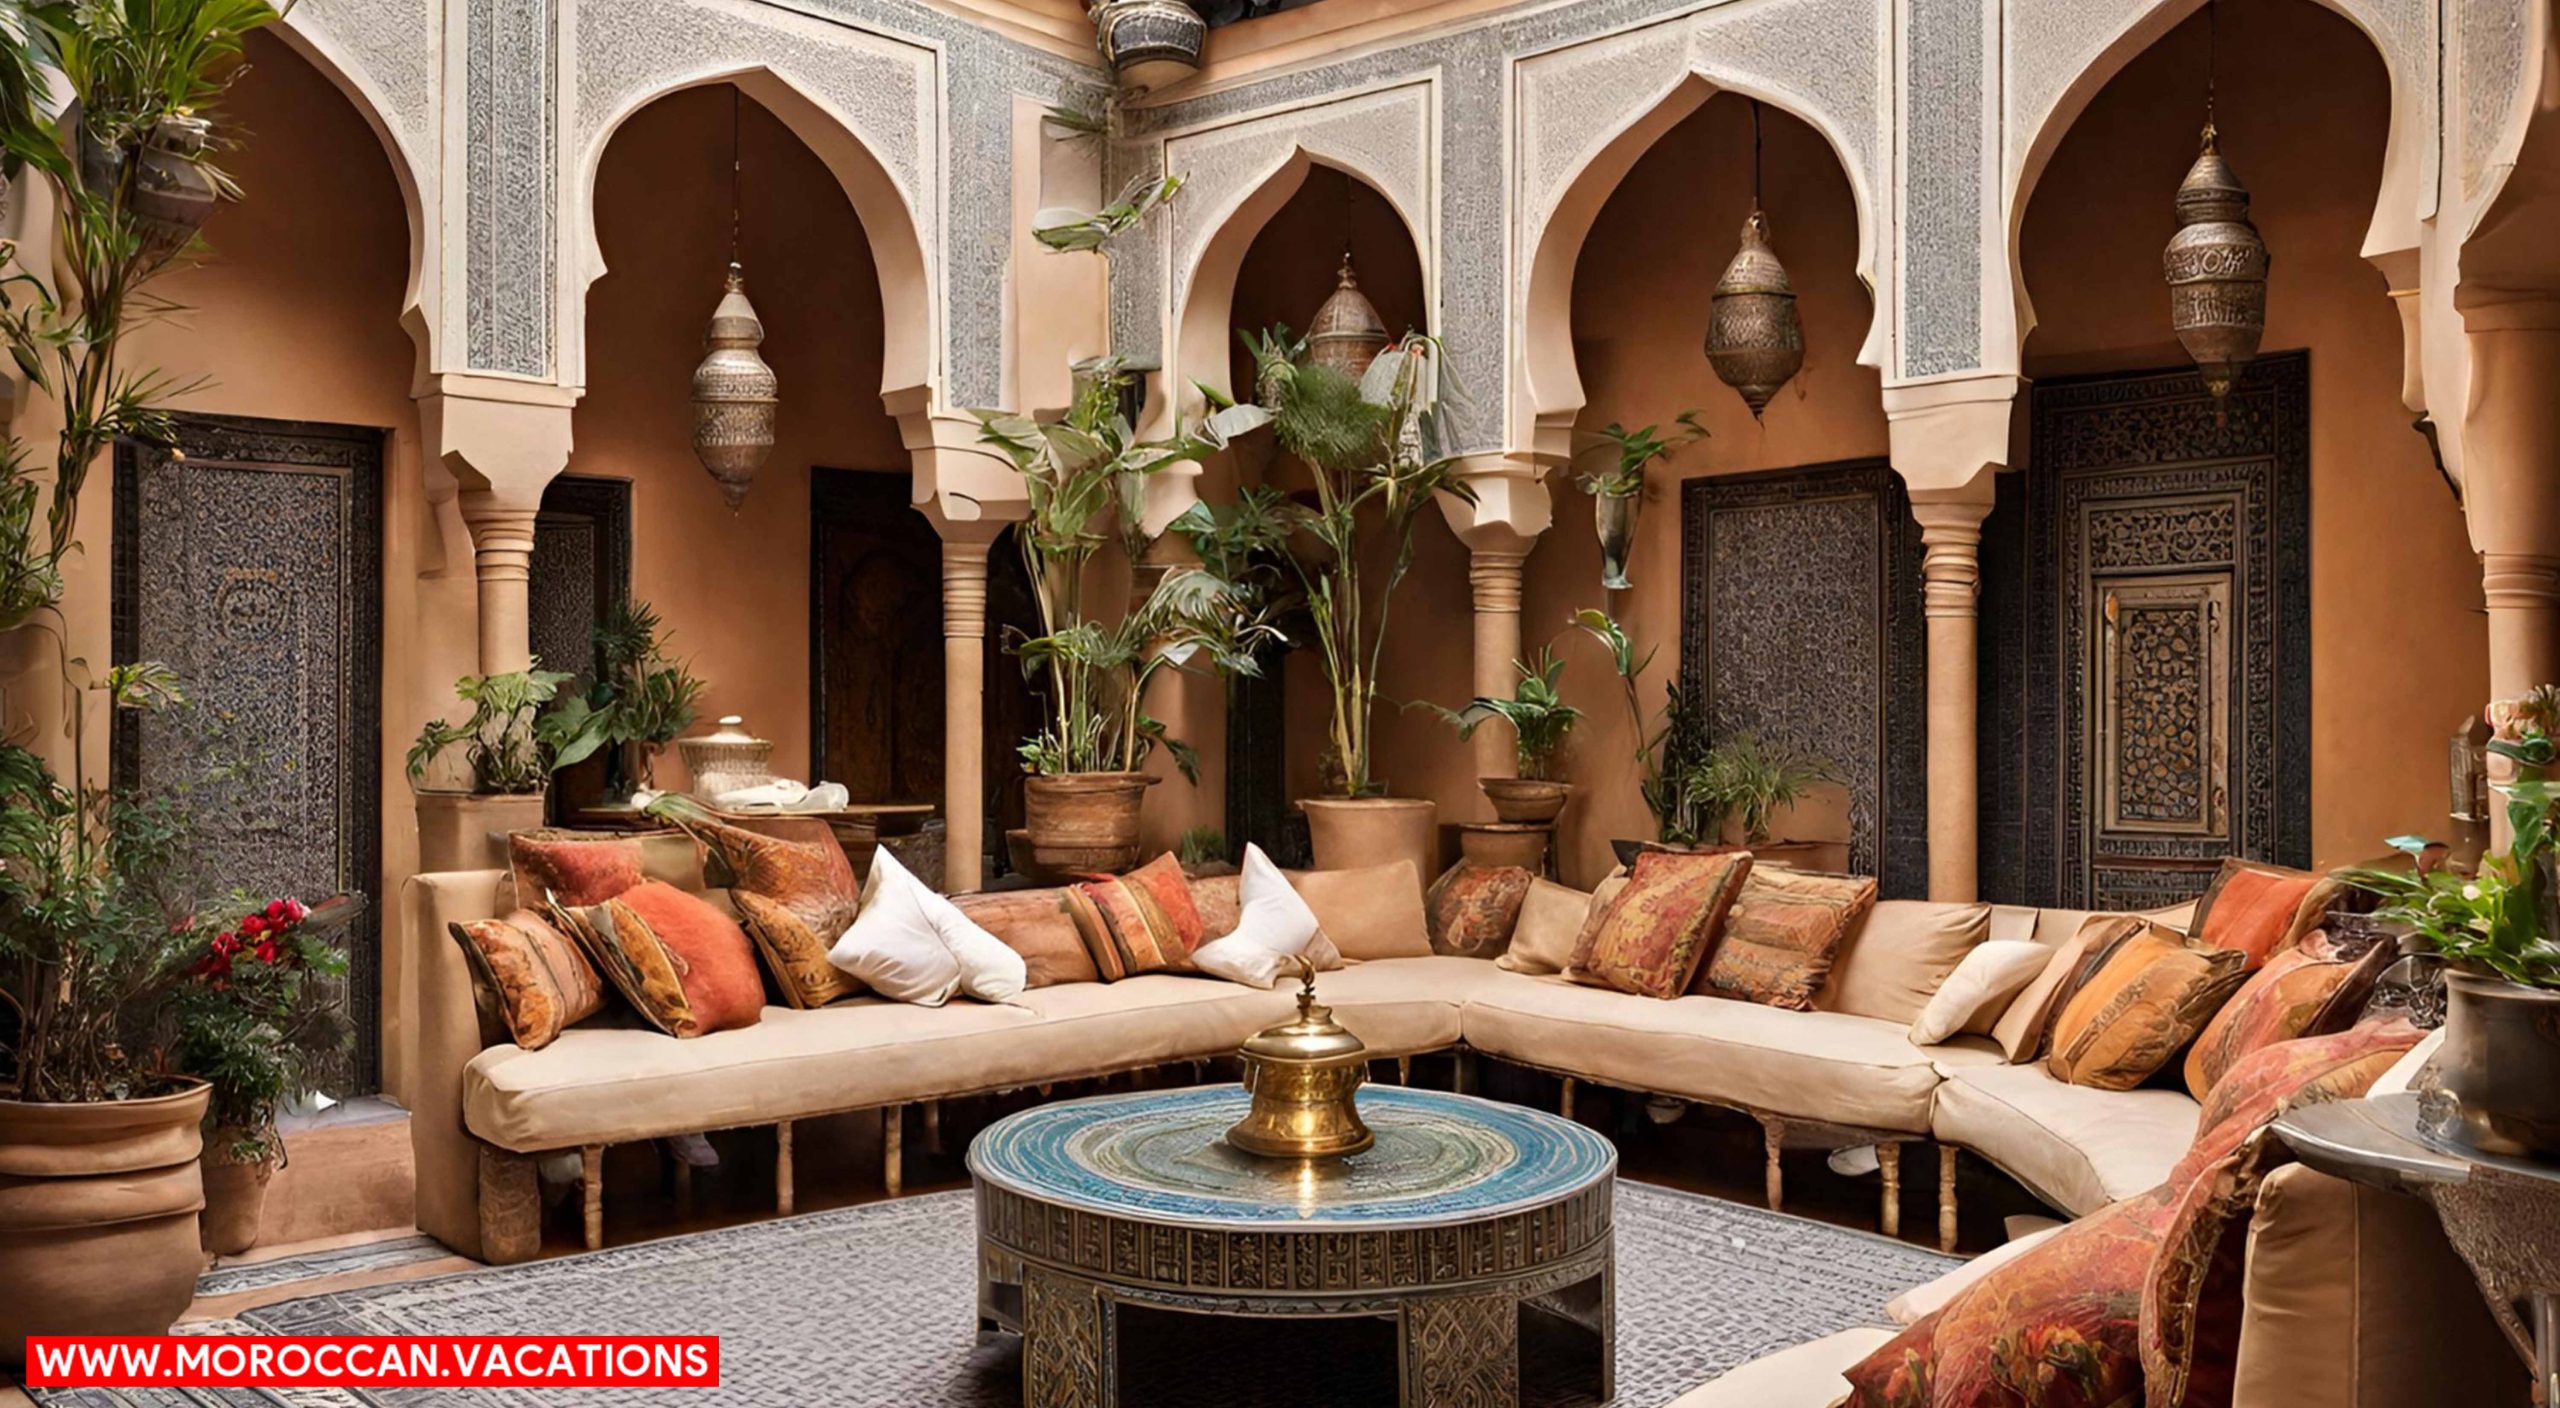 A lavish Moroccan riad courtyard with plush furnishings, ornate mosaics, a tranquil pool.